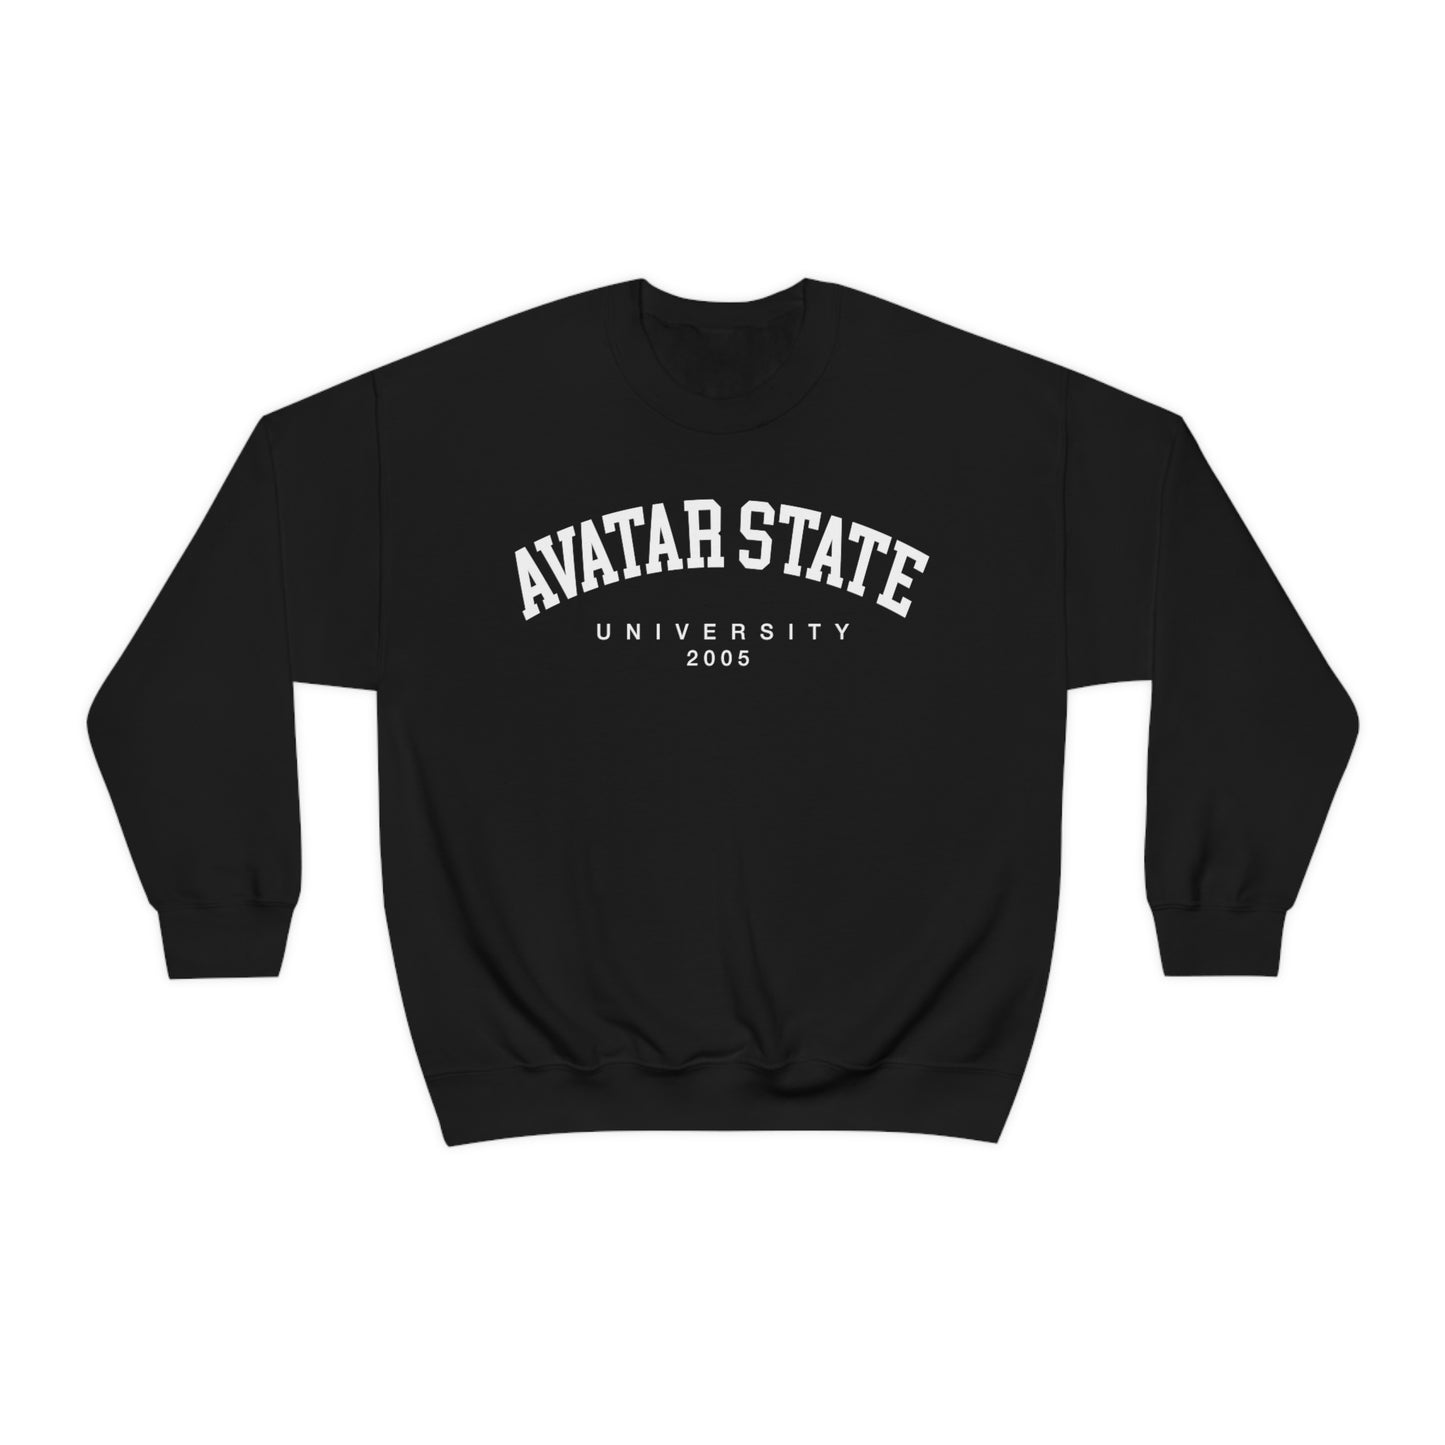 Avatars State University Crewneck Sweatshirt Oversized Anime Pullover Unisex Sweatshirt est 2005